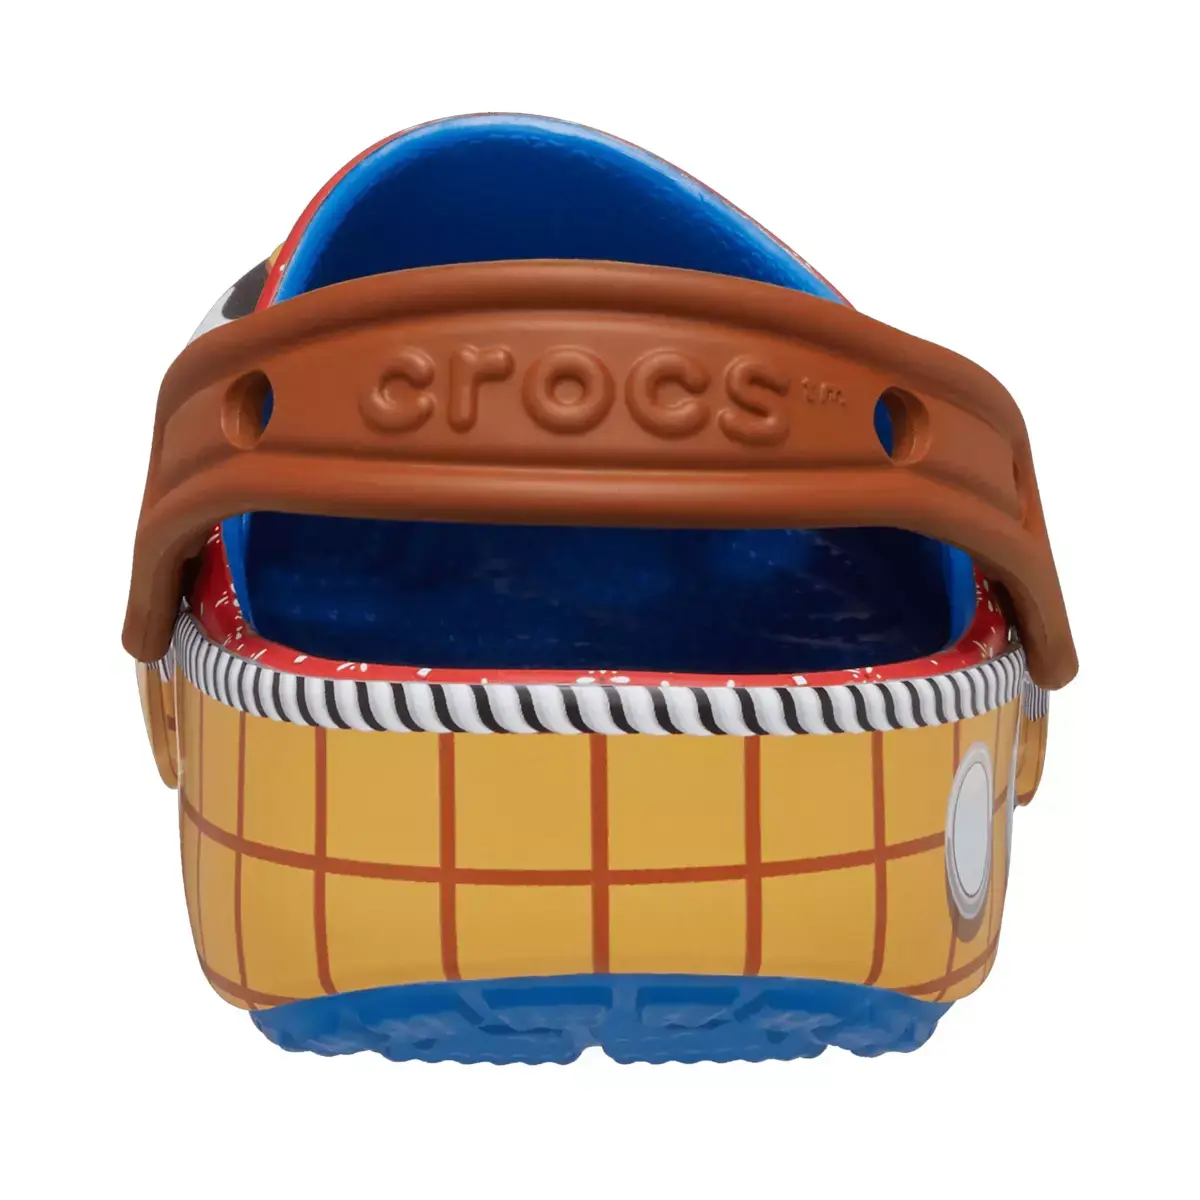 Crocs x Toy Story